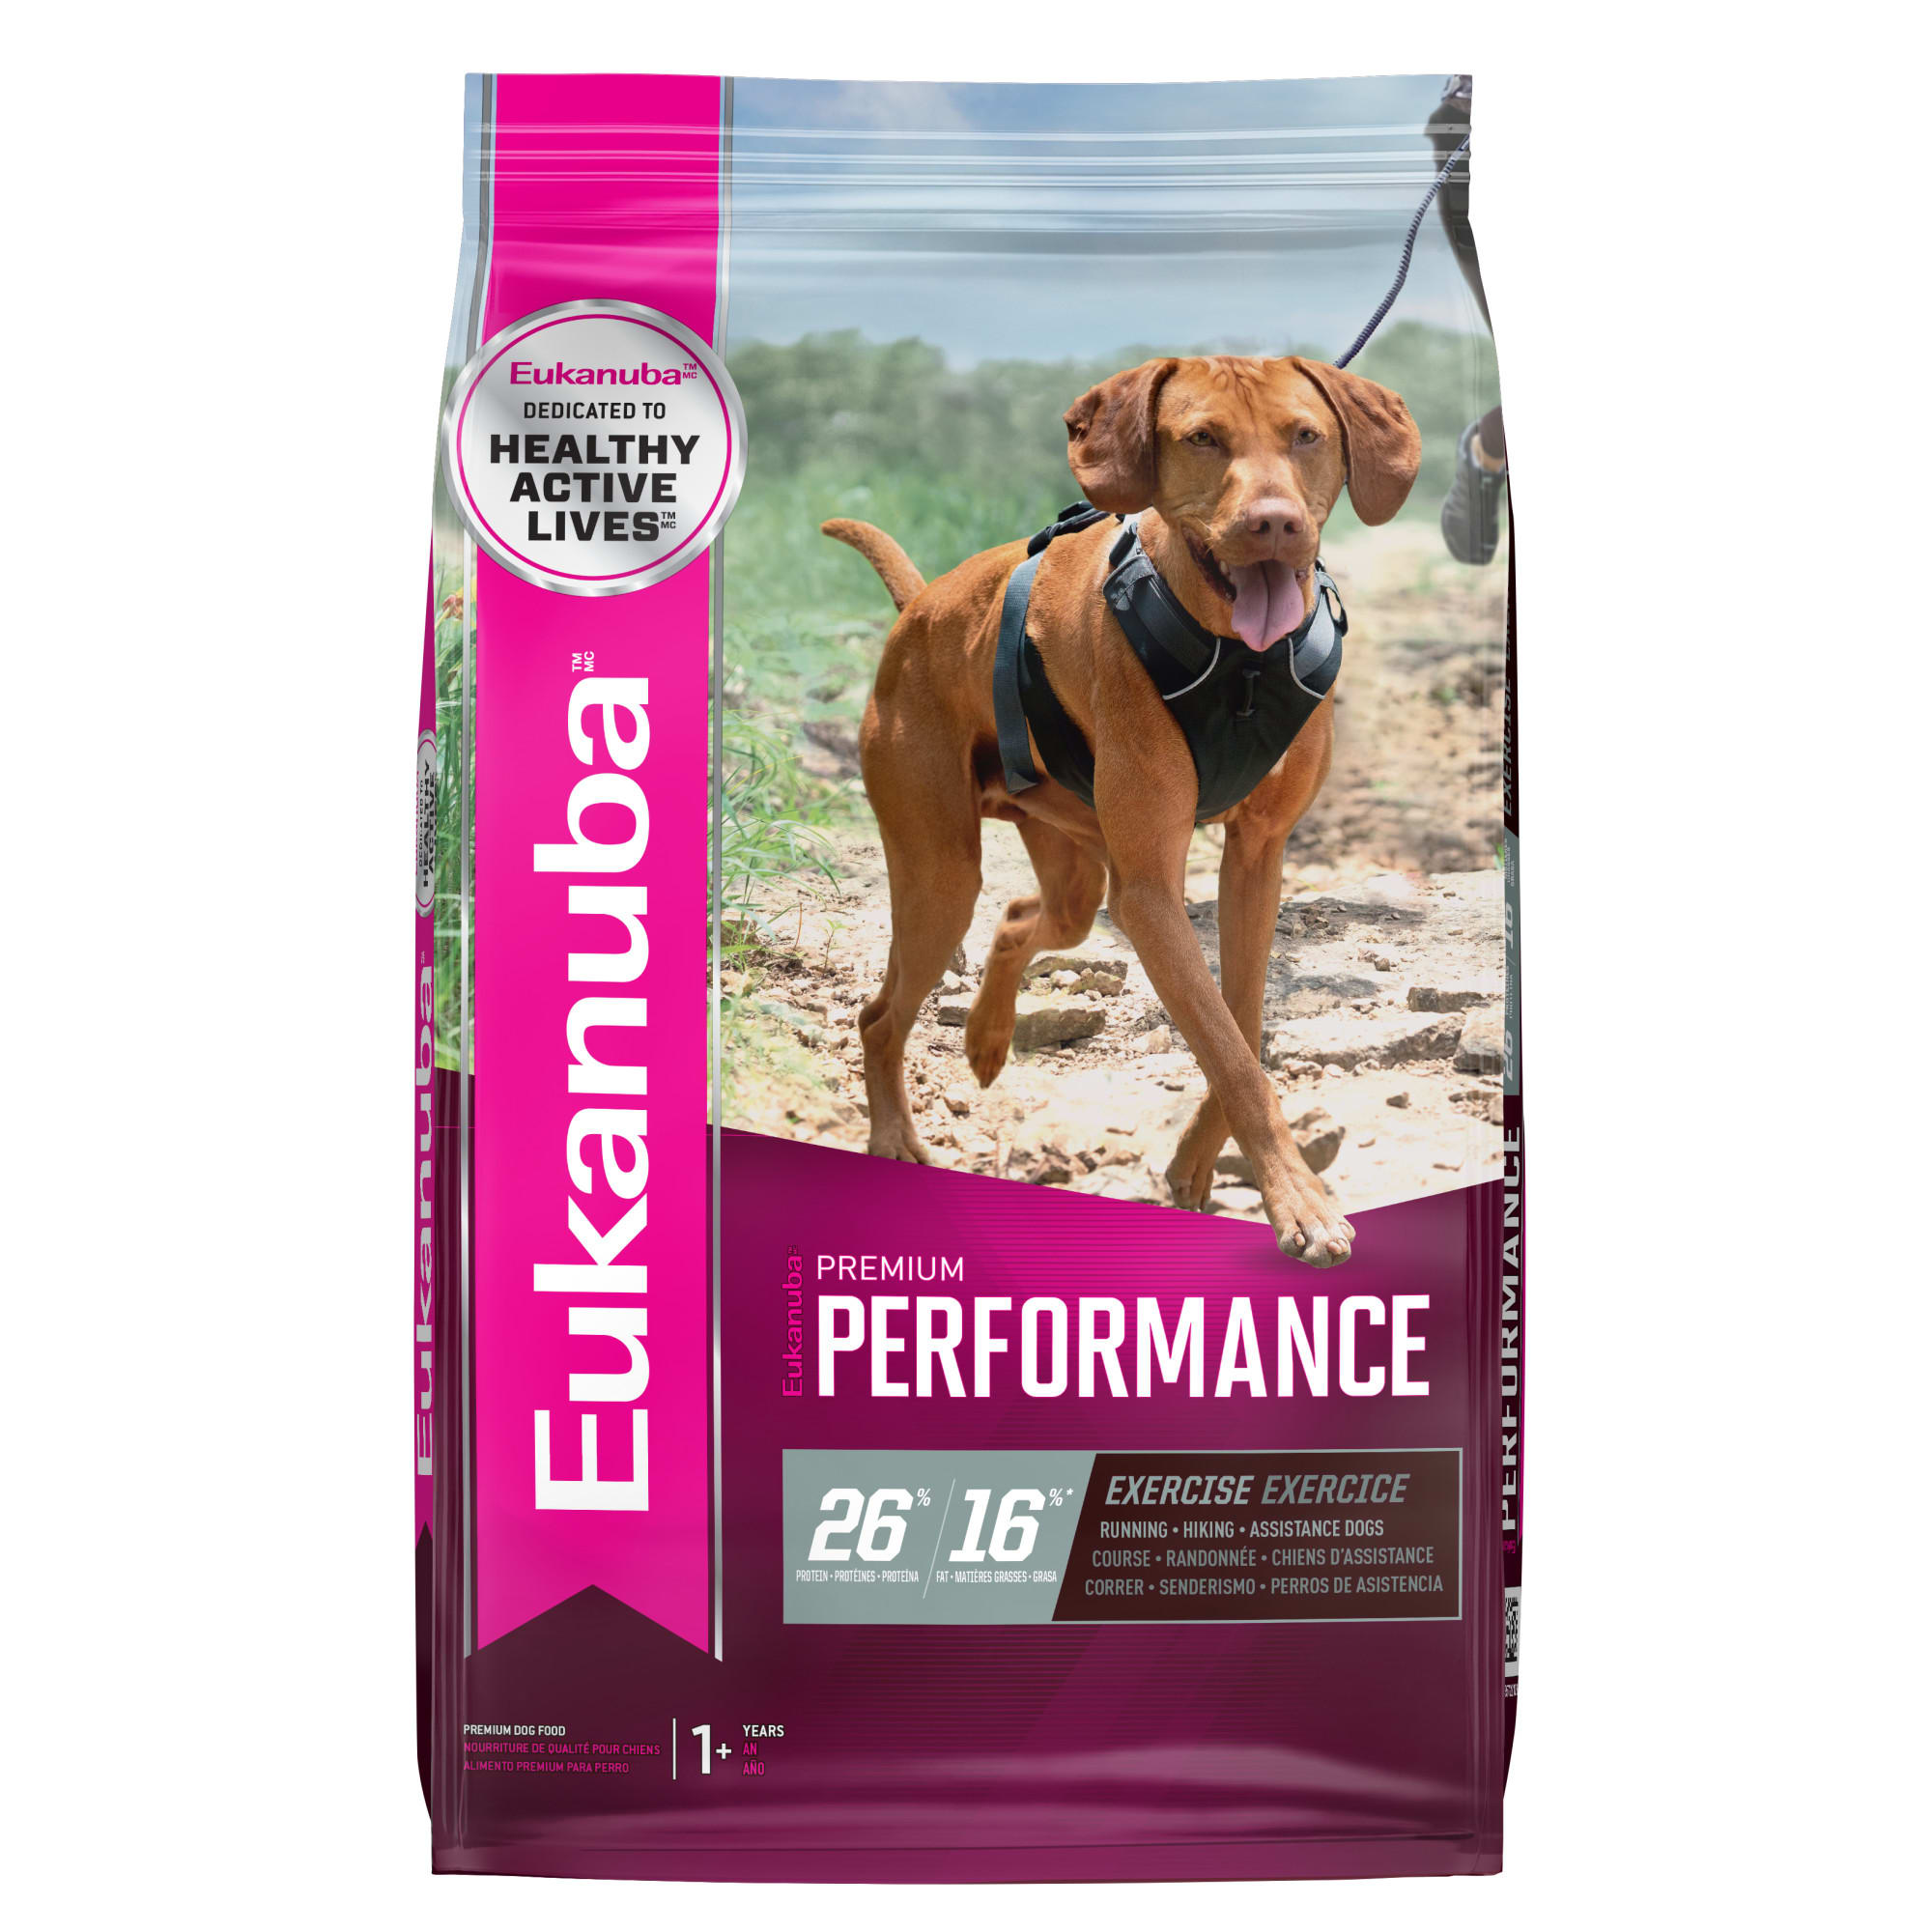 Eukanuba Premium Performance 26/16 EXERCISE Adult Dry Dog Food